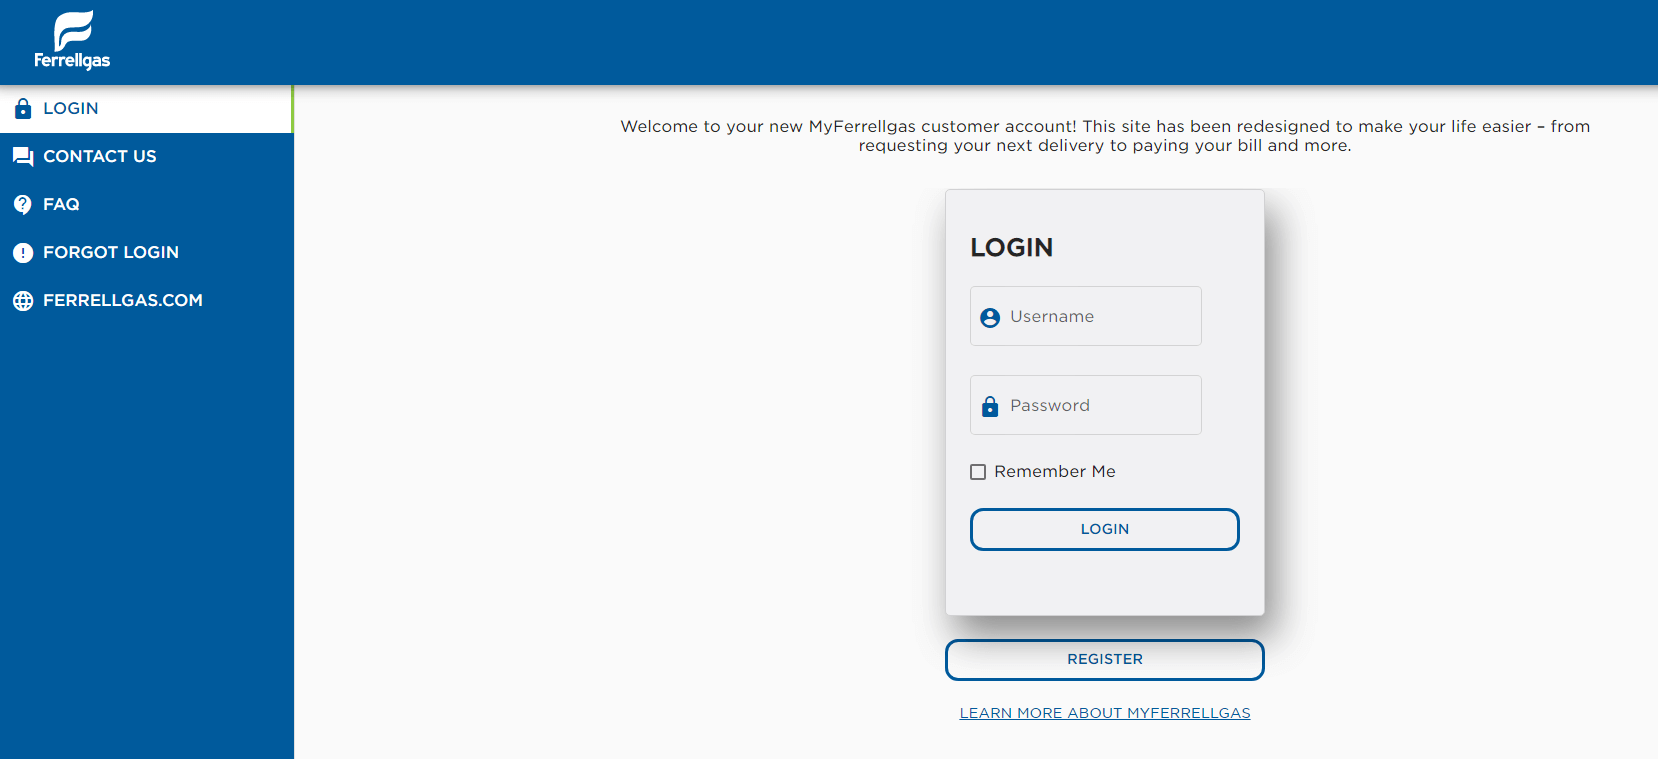 click on forgot login option in myferrellgas website